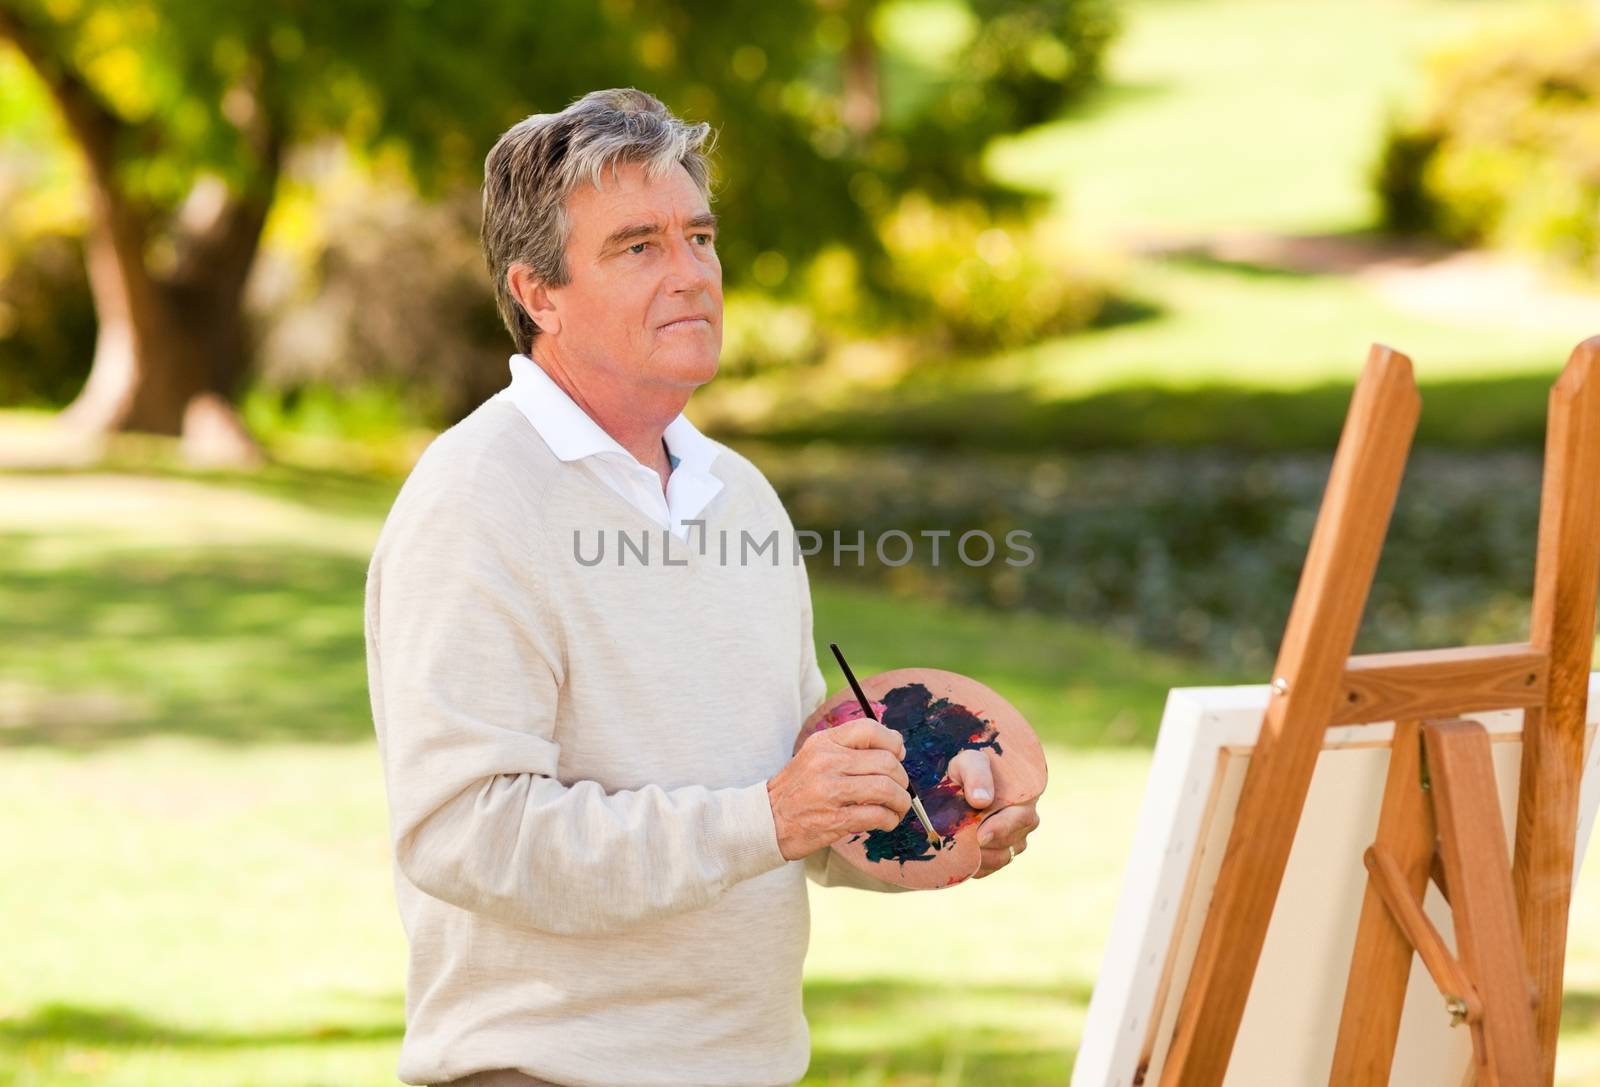 Elderly man painting in the park by Wavebreakmedia